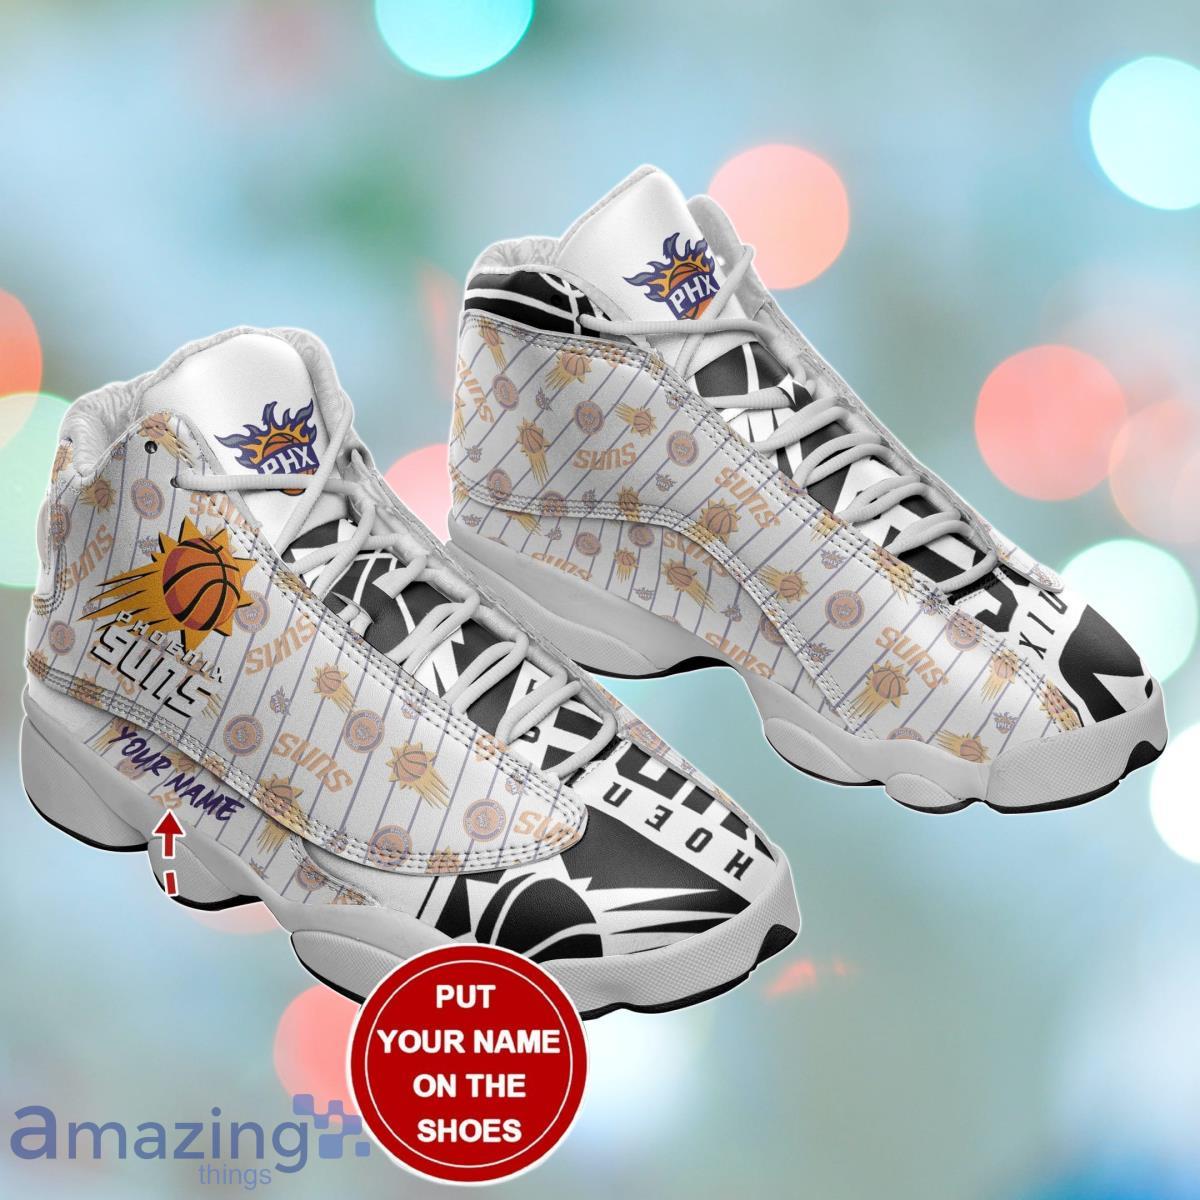 Phoenix Suns Basketball Team Purple Air Jordan 13 Shoes Gift For Fans